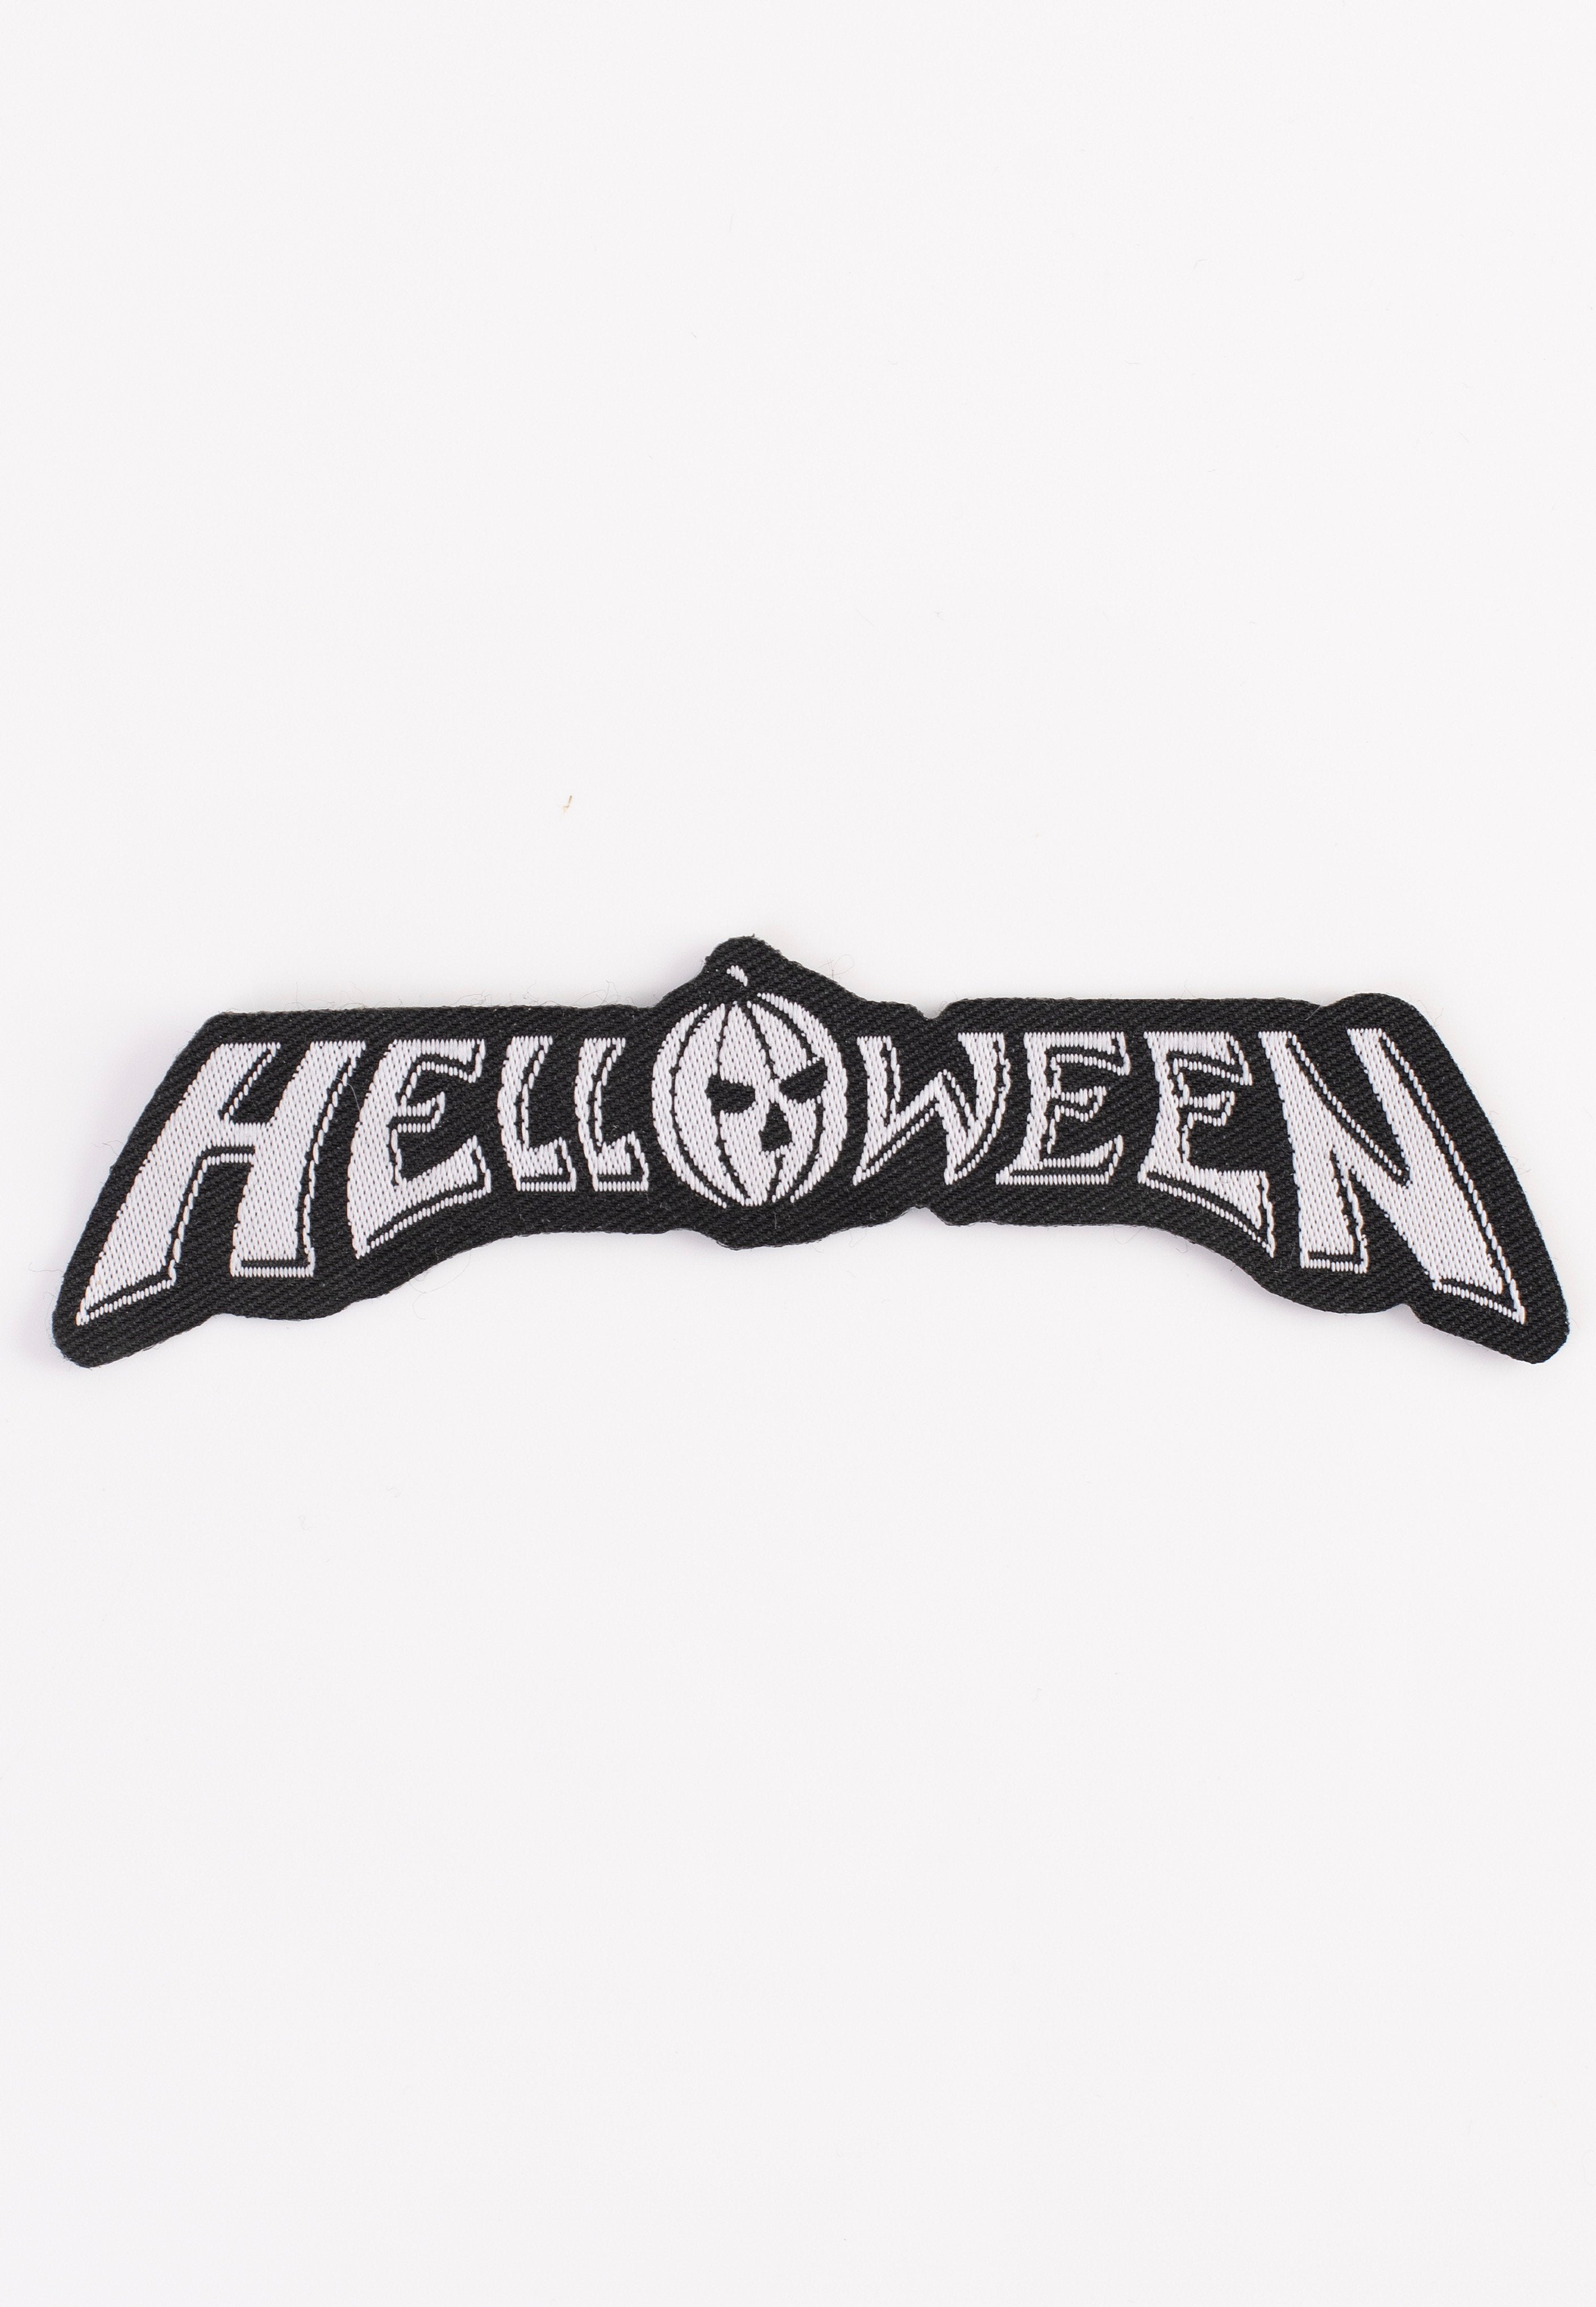 Helloween - Logo Cut Out - Patch